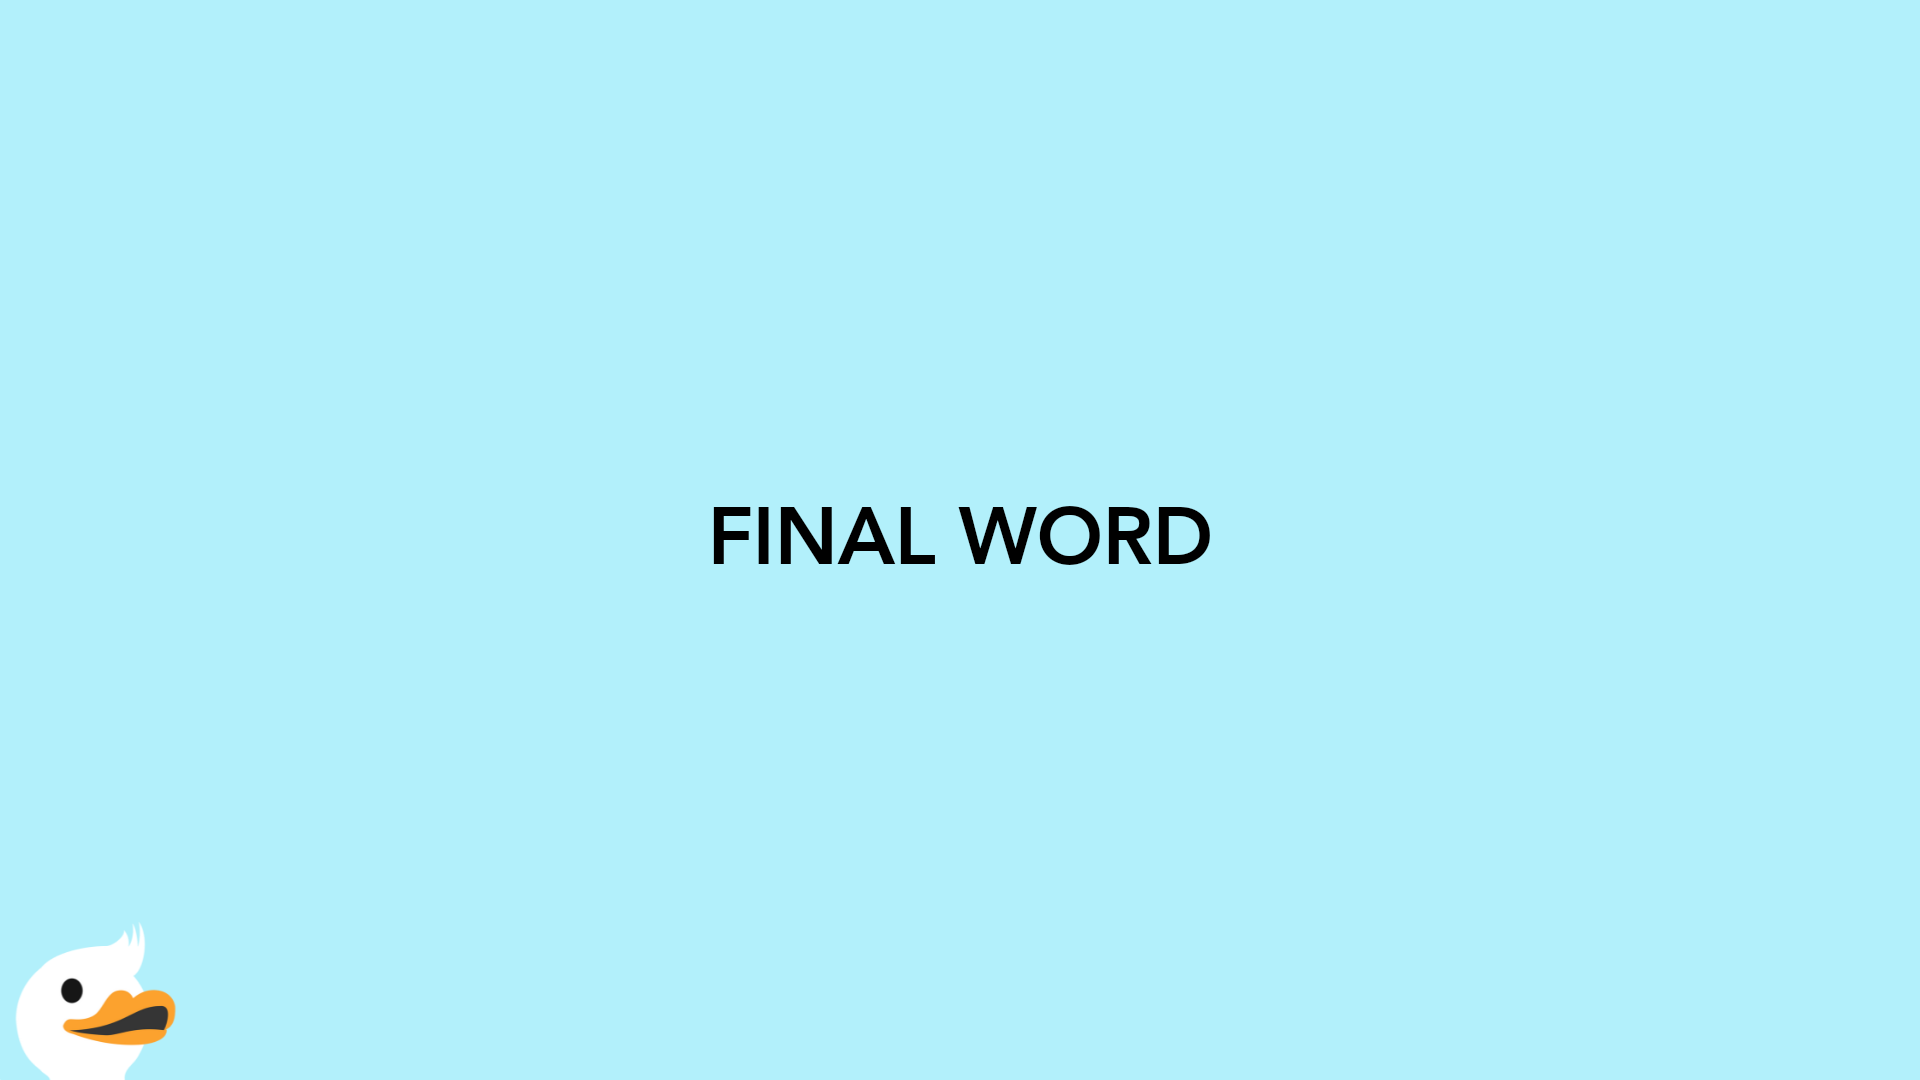 FINAL WORD